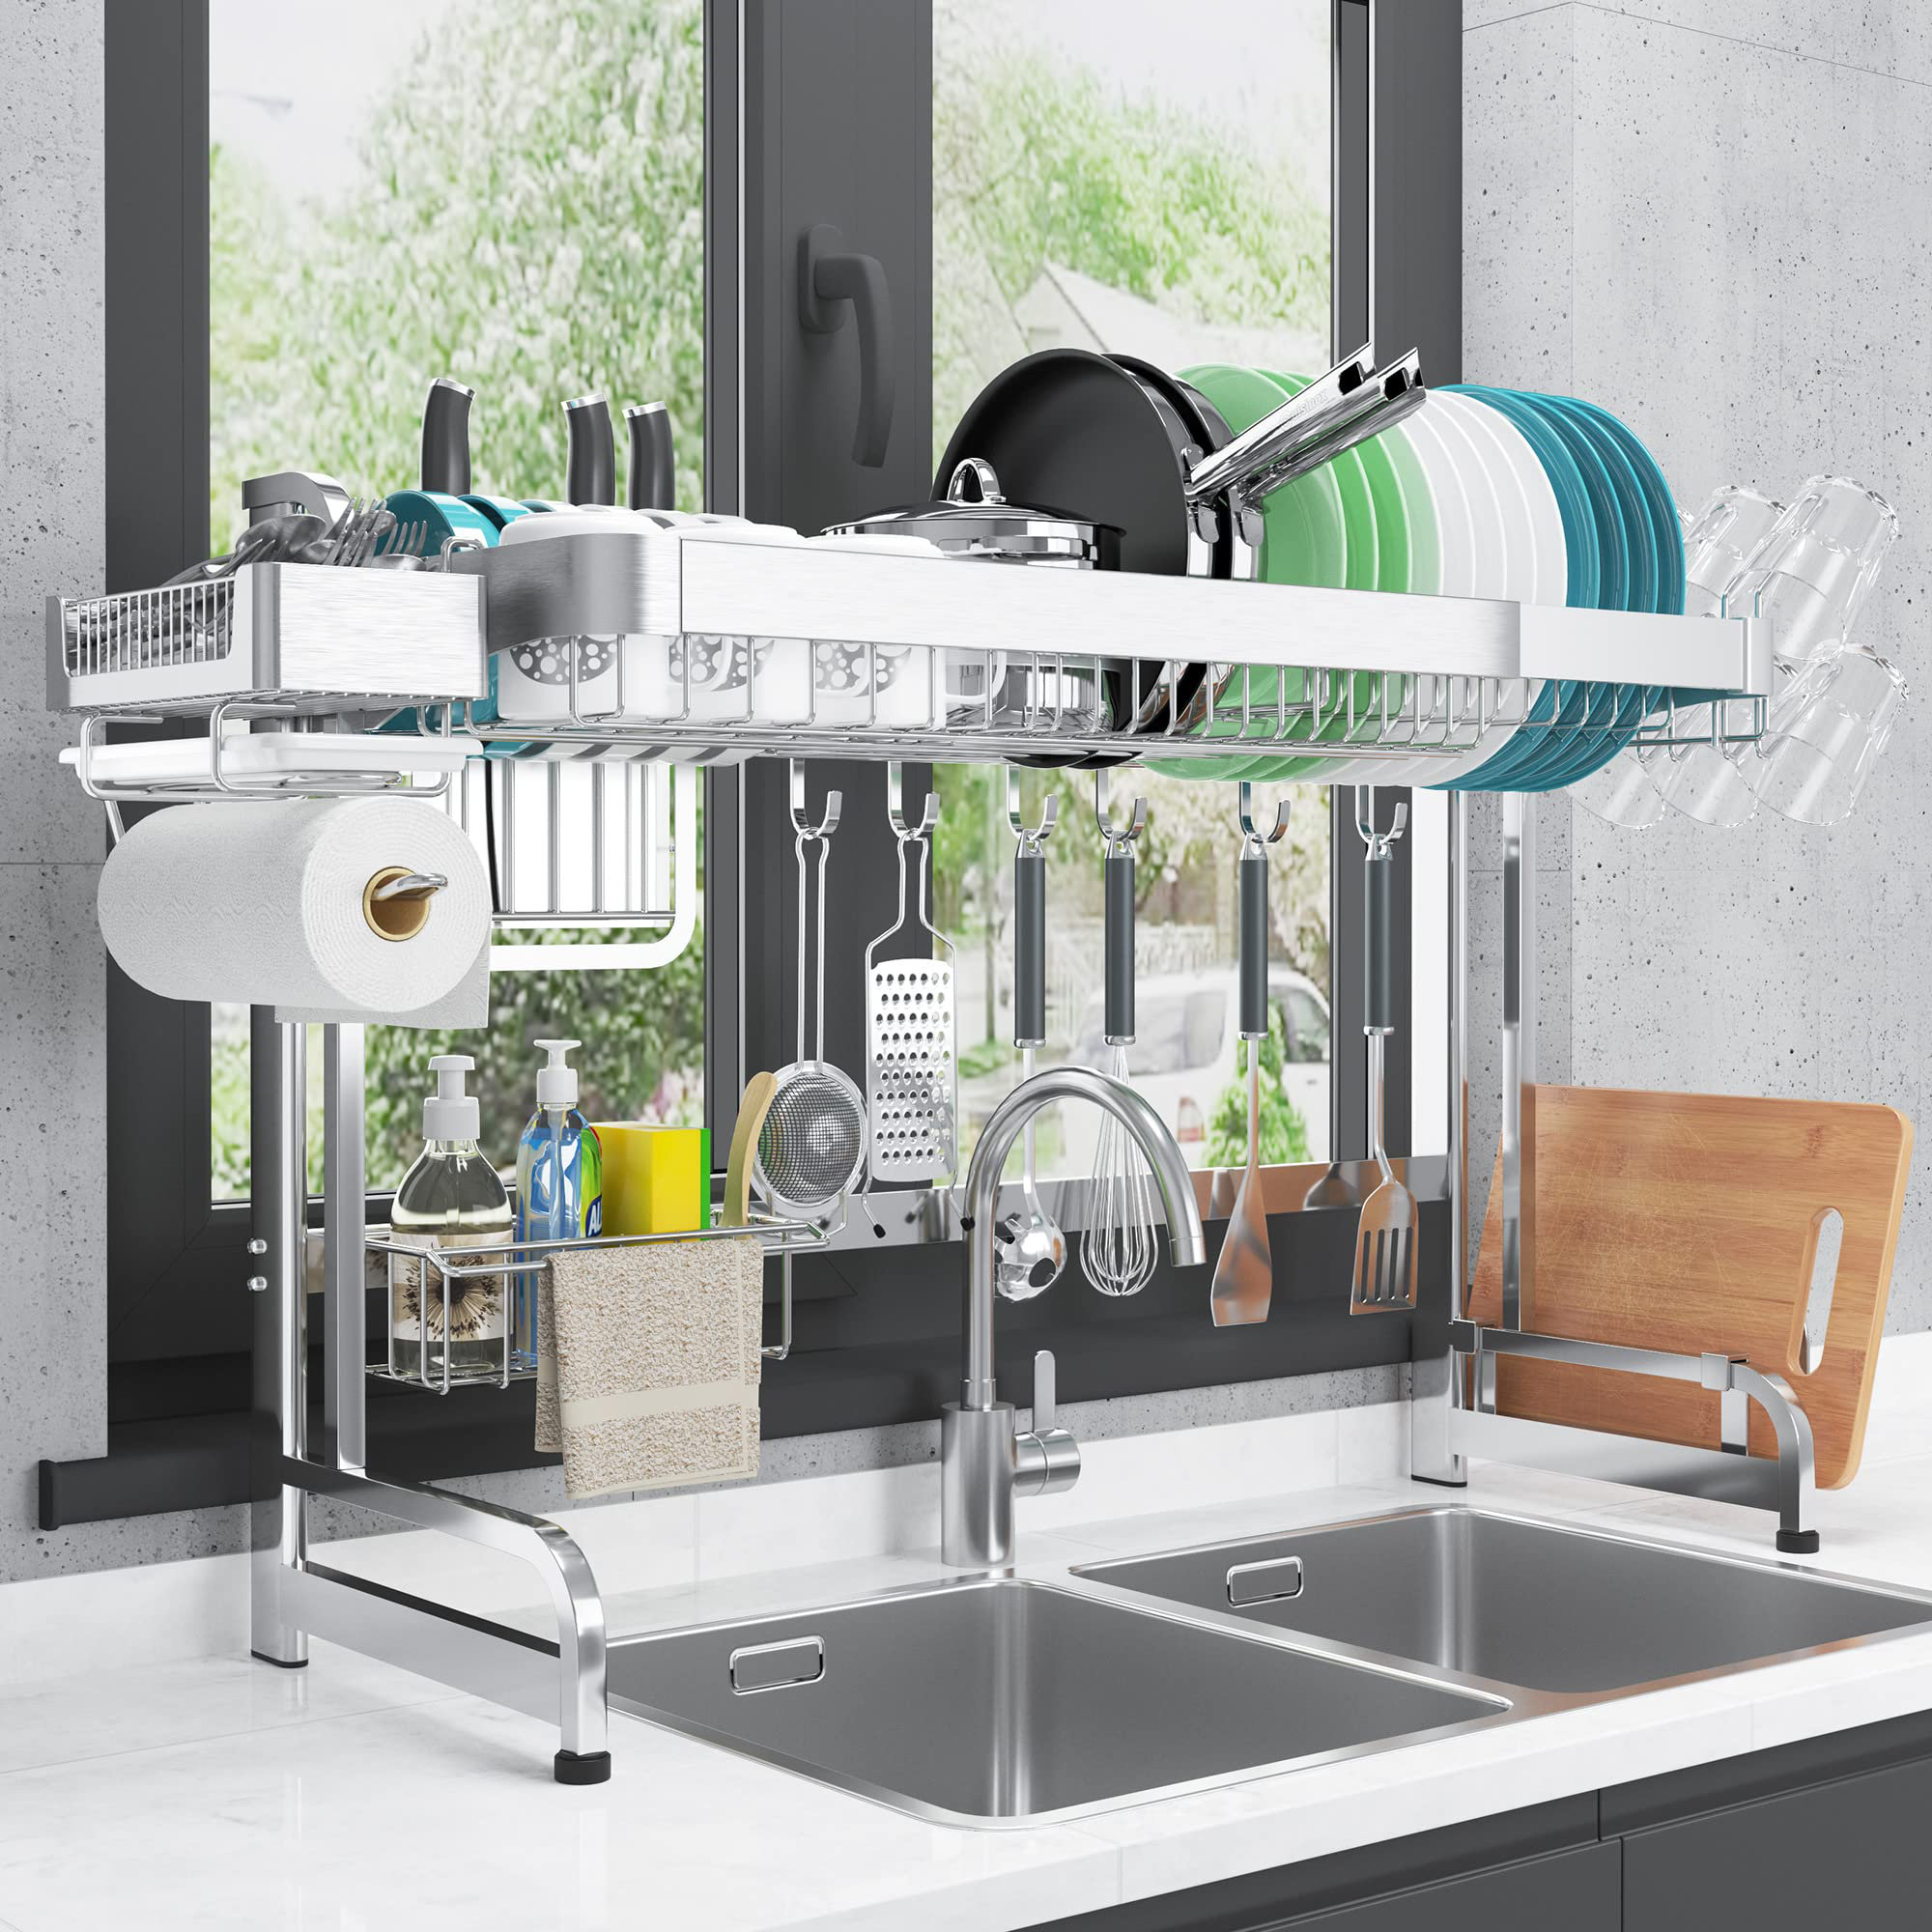 SmartDesign Smart Design Expandable Dish Drainer Drying Rack